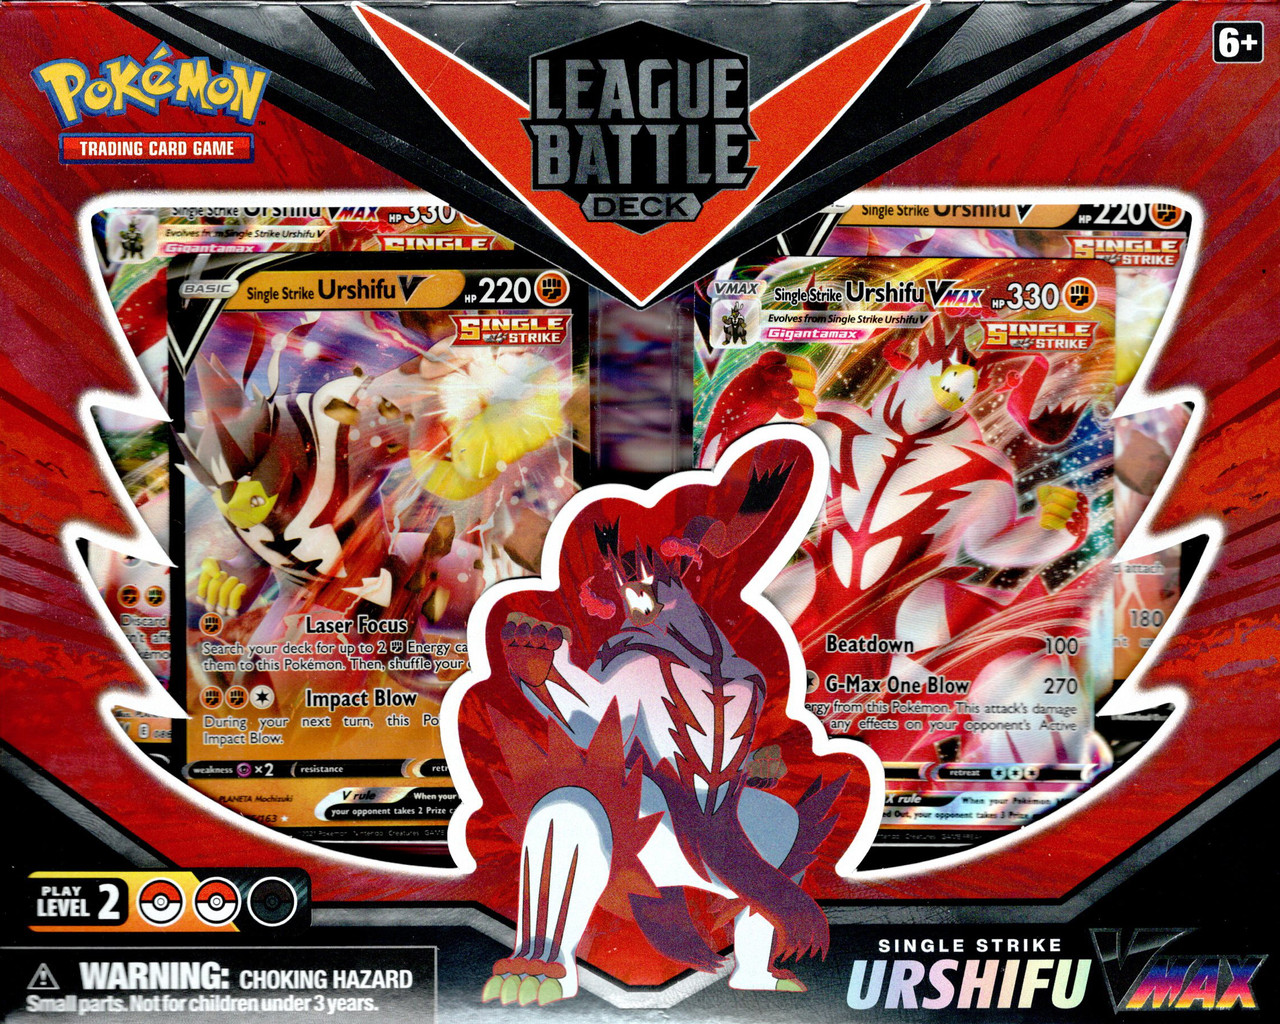 Pokémon TCG: Single Strike Urshifu VMAX League Battle Deck